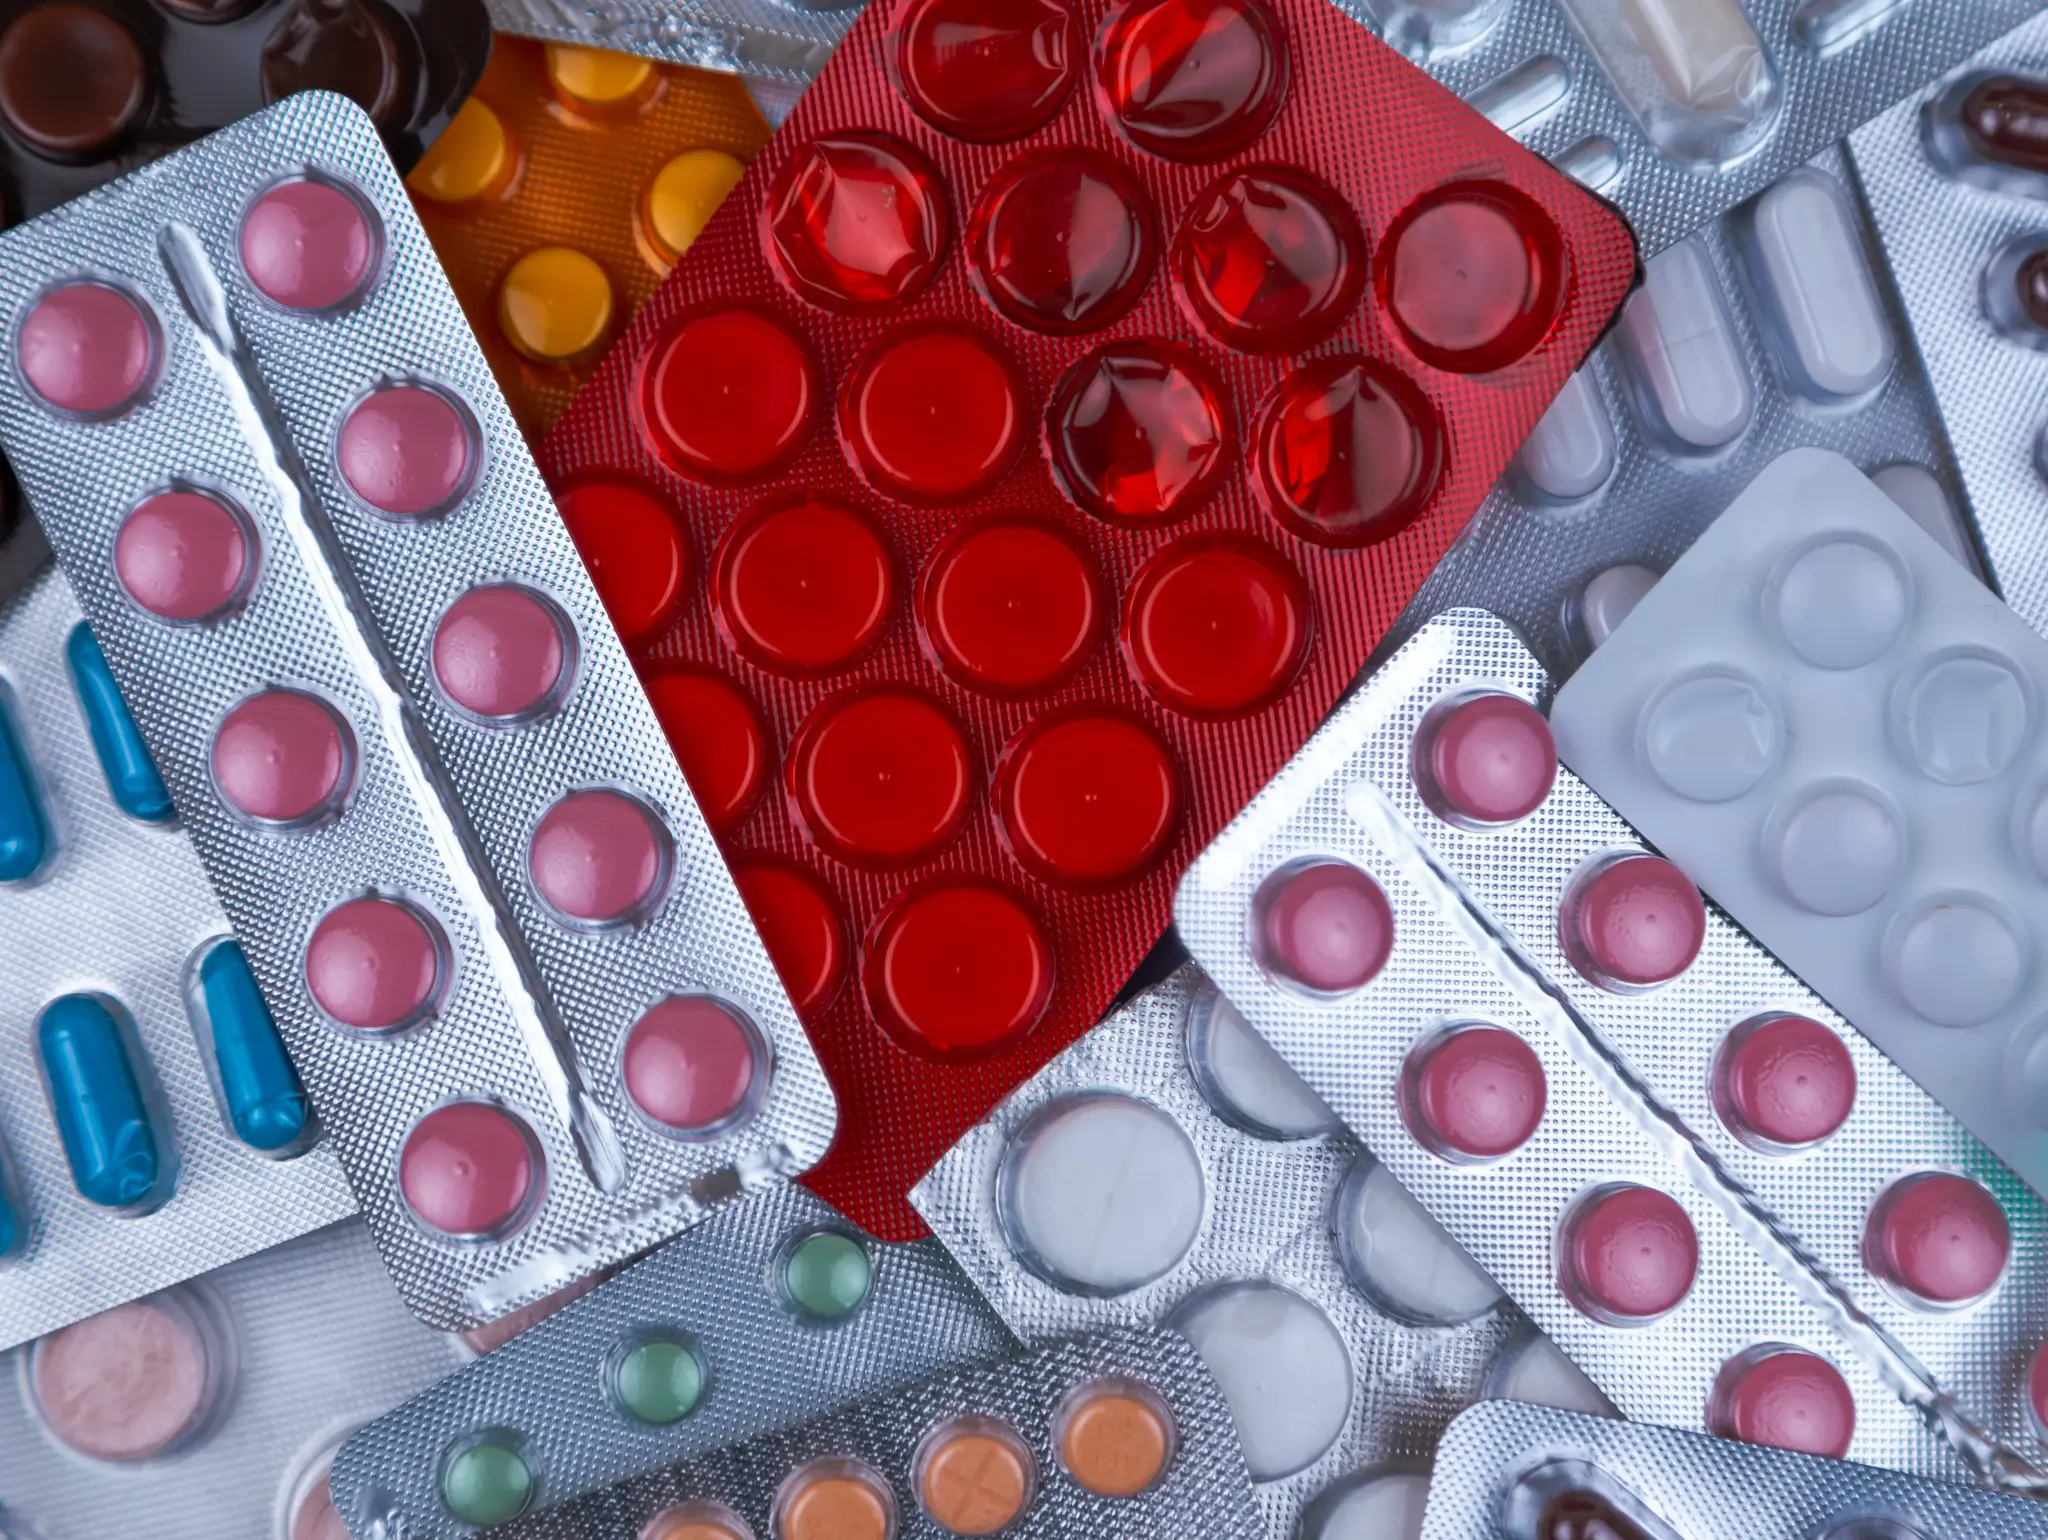 Europe Plans Further Antibiotic Shortage Countermeasures